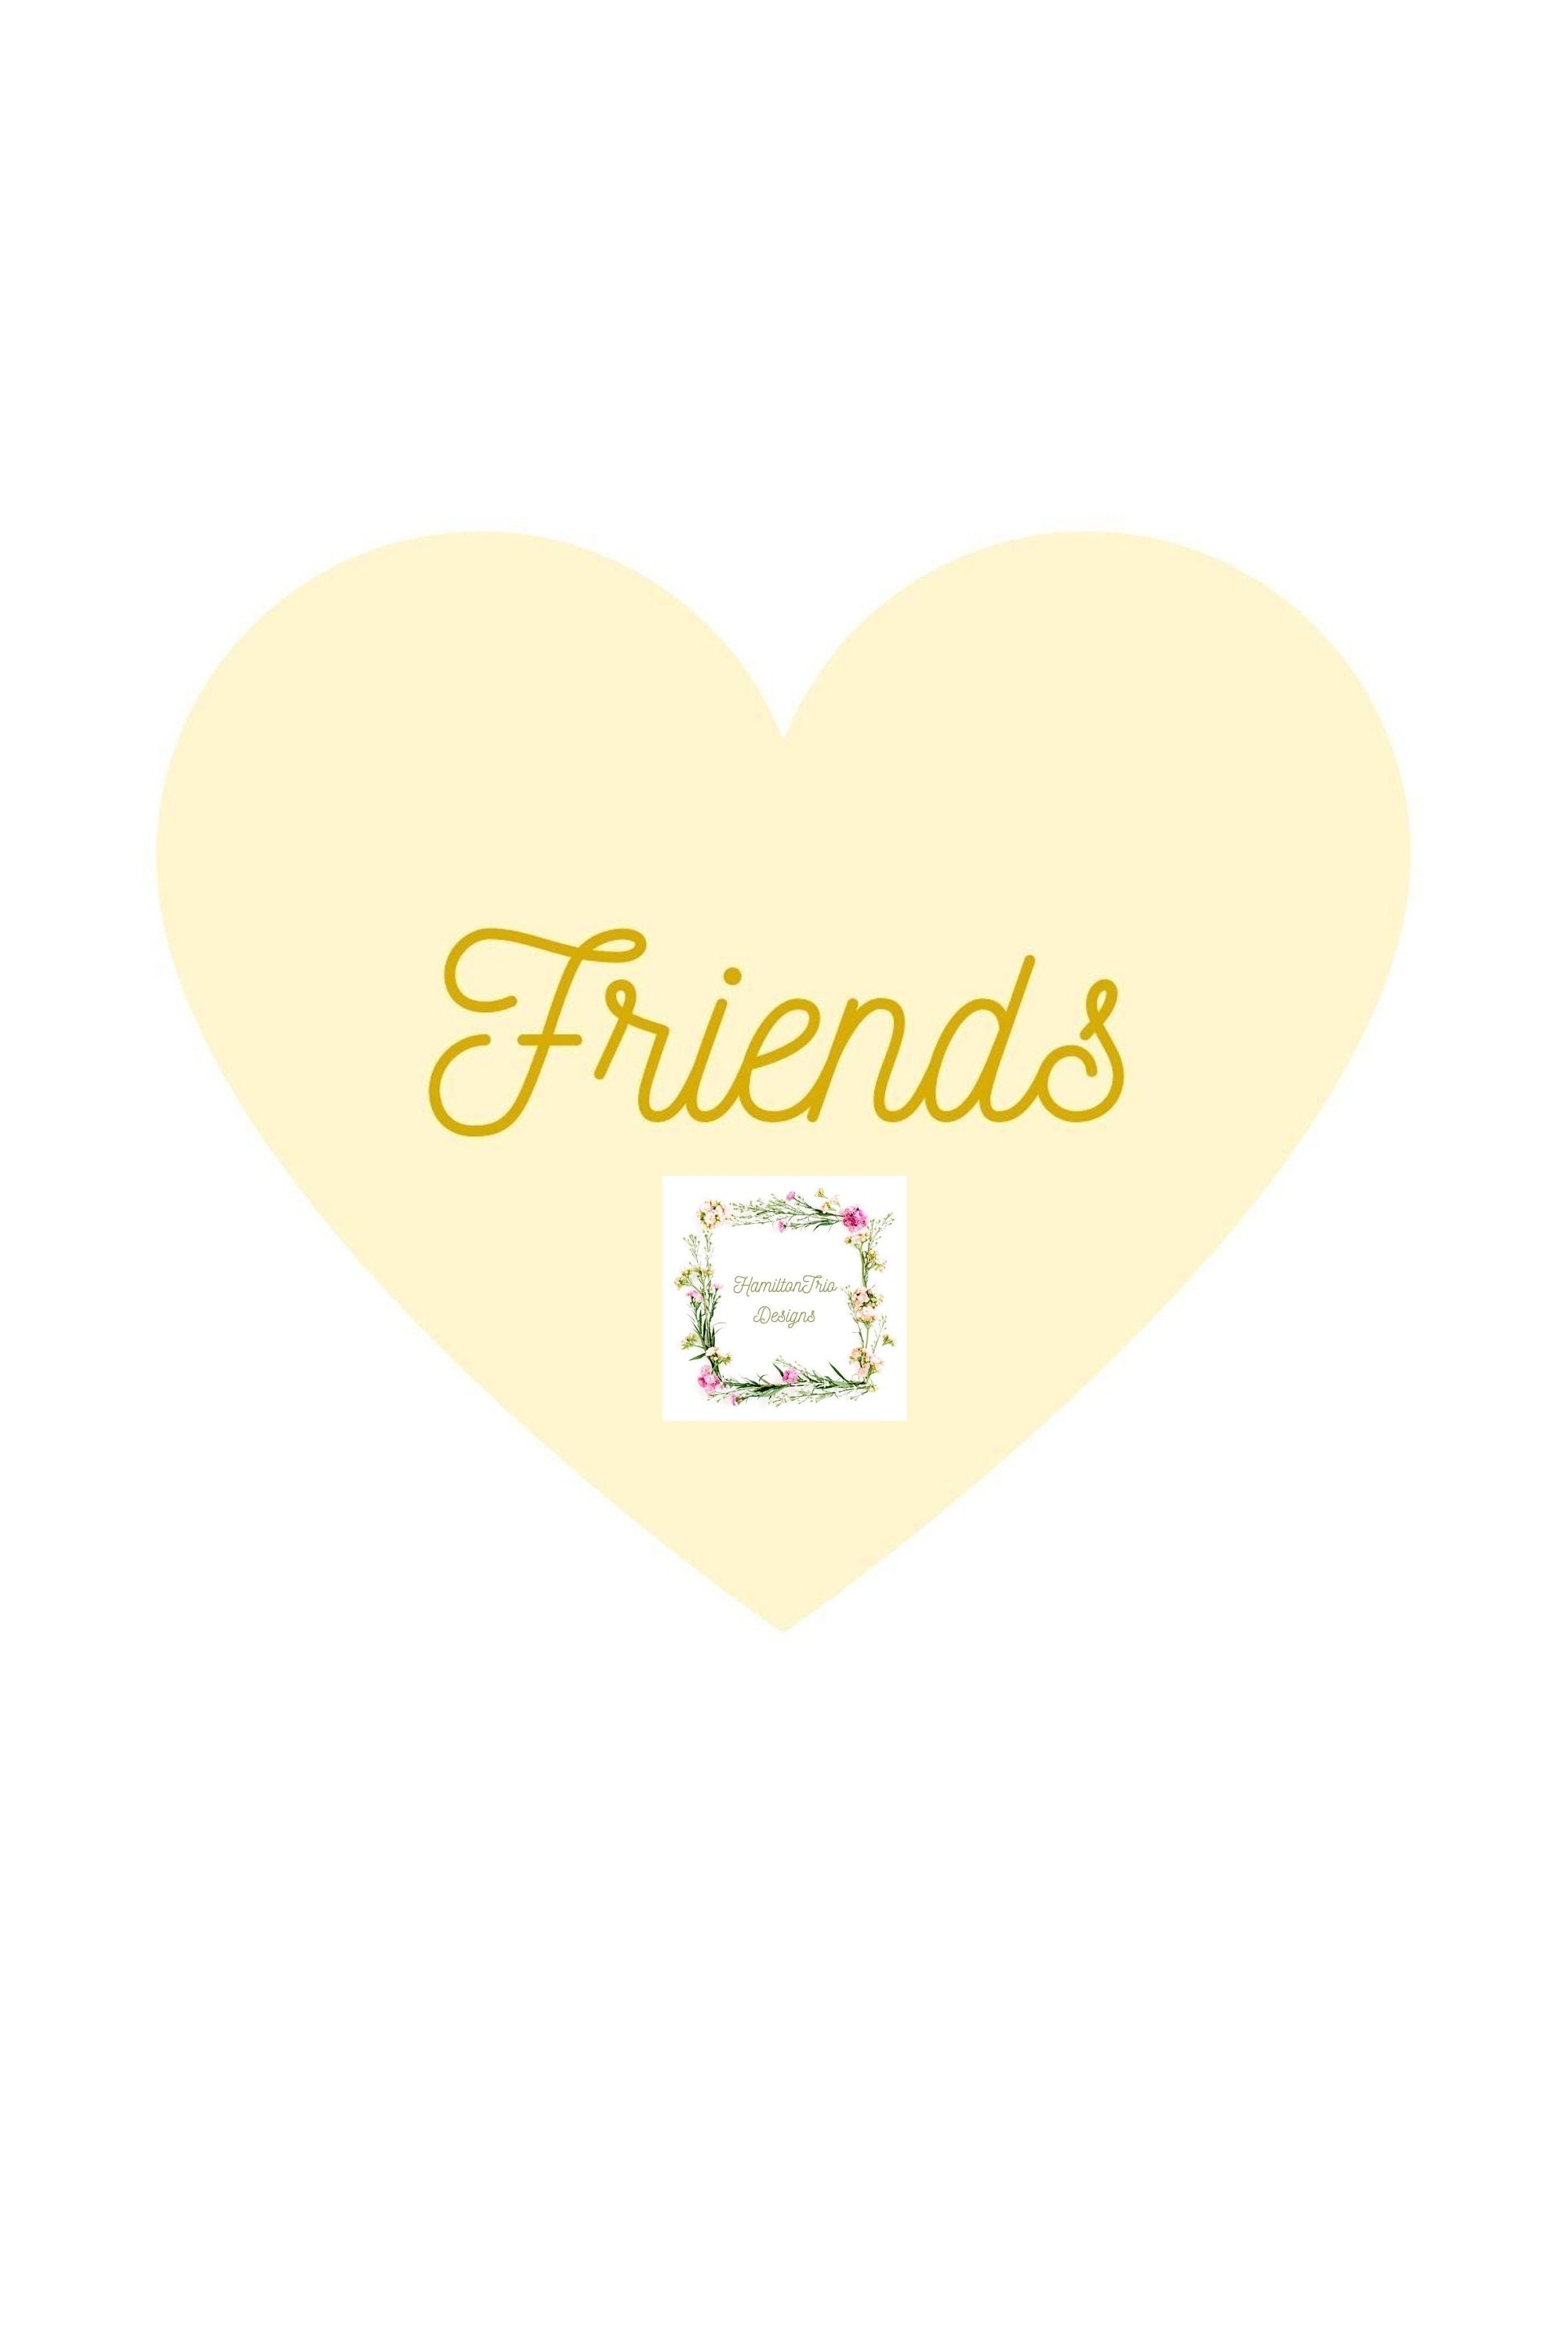 Friends Yellow Heart Digital Prints | Etsy